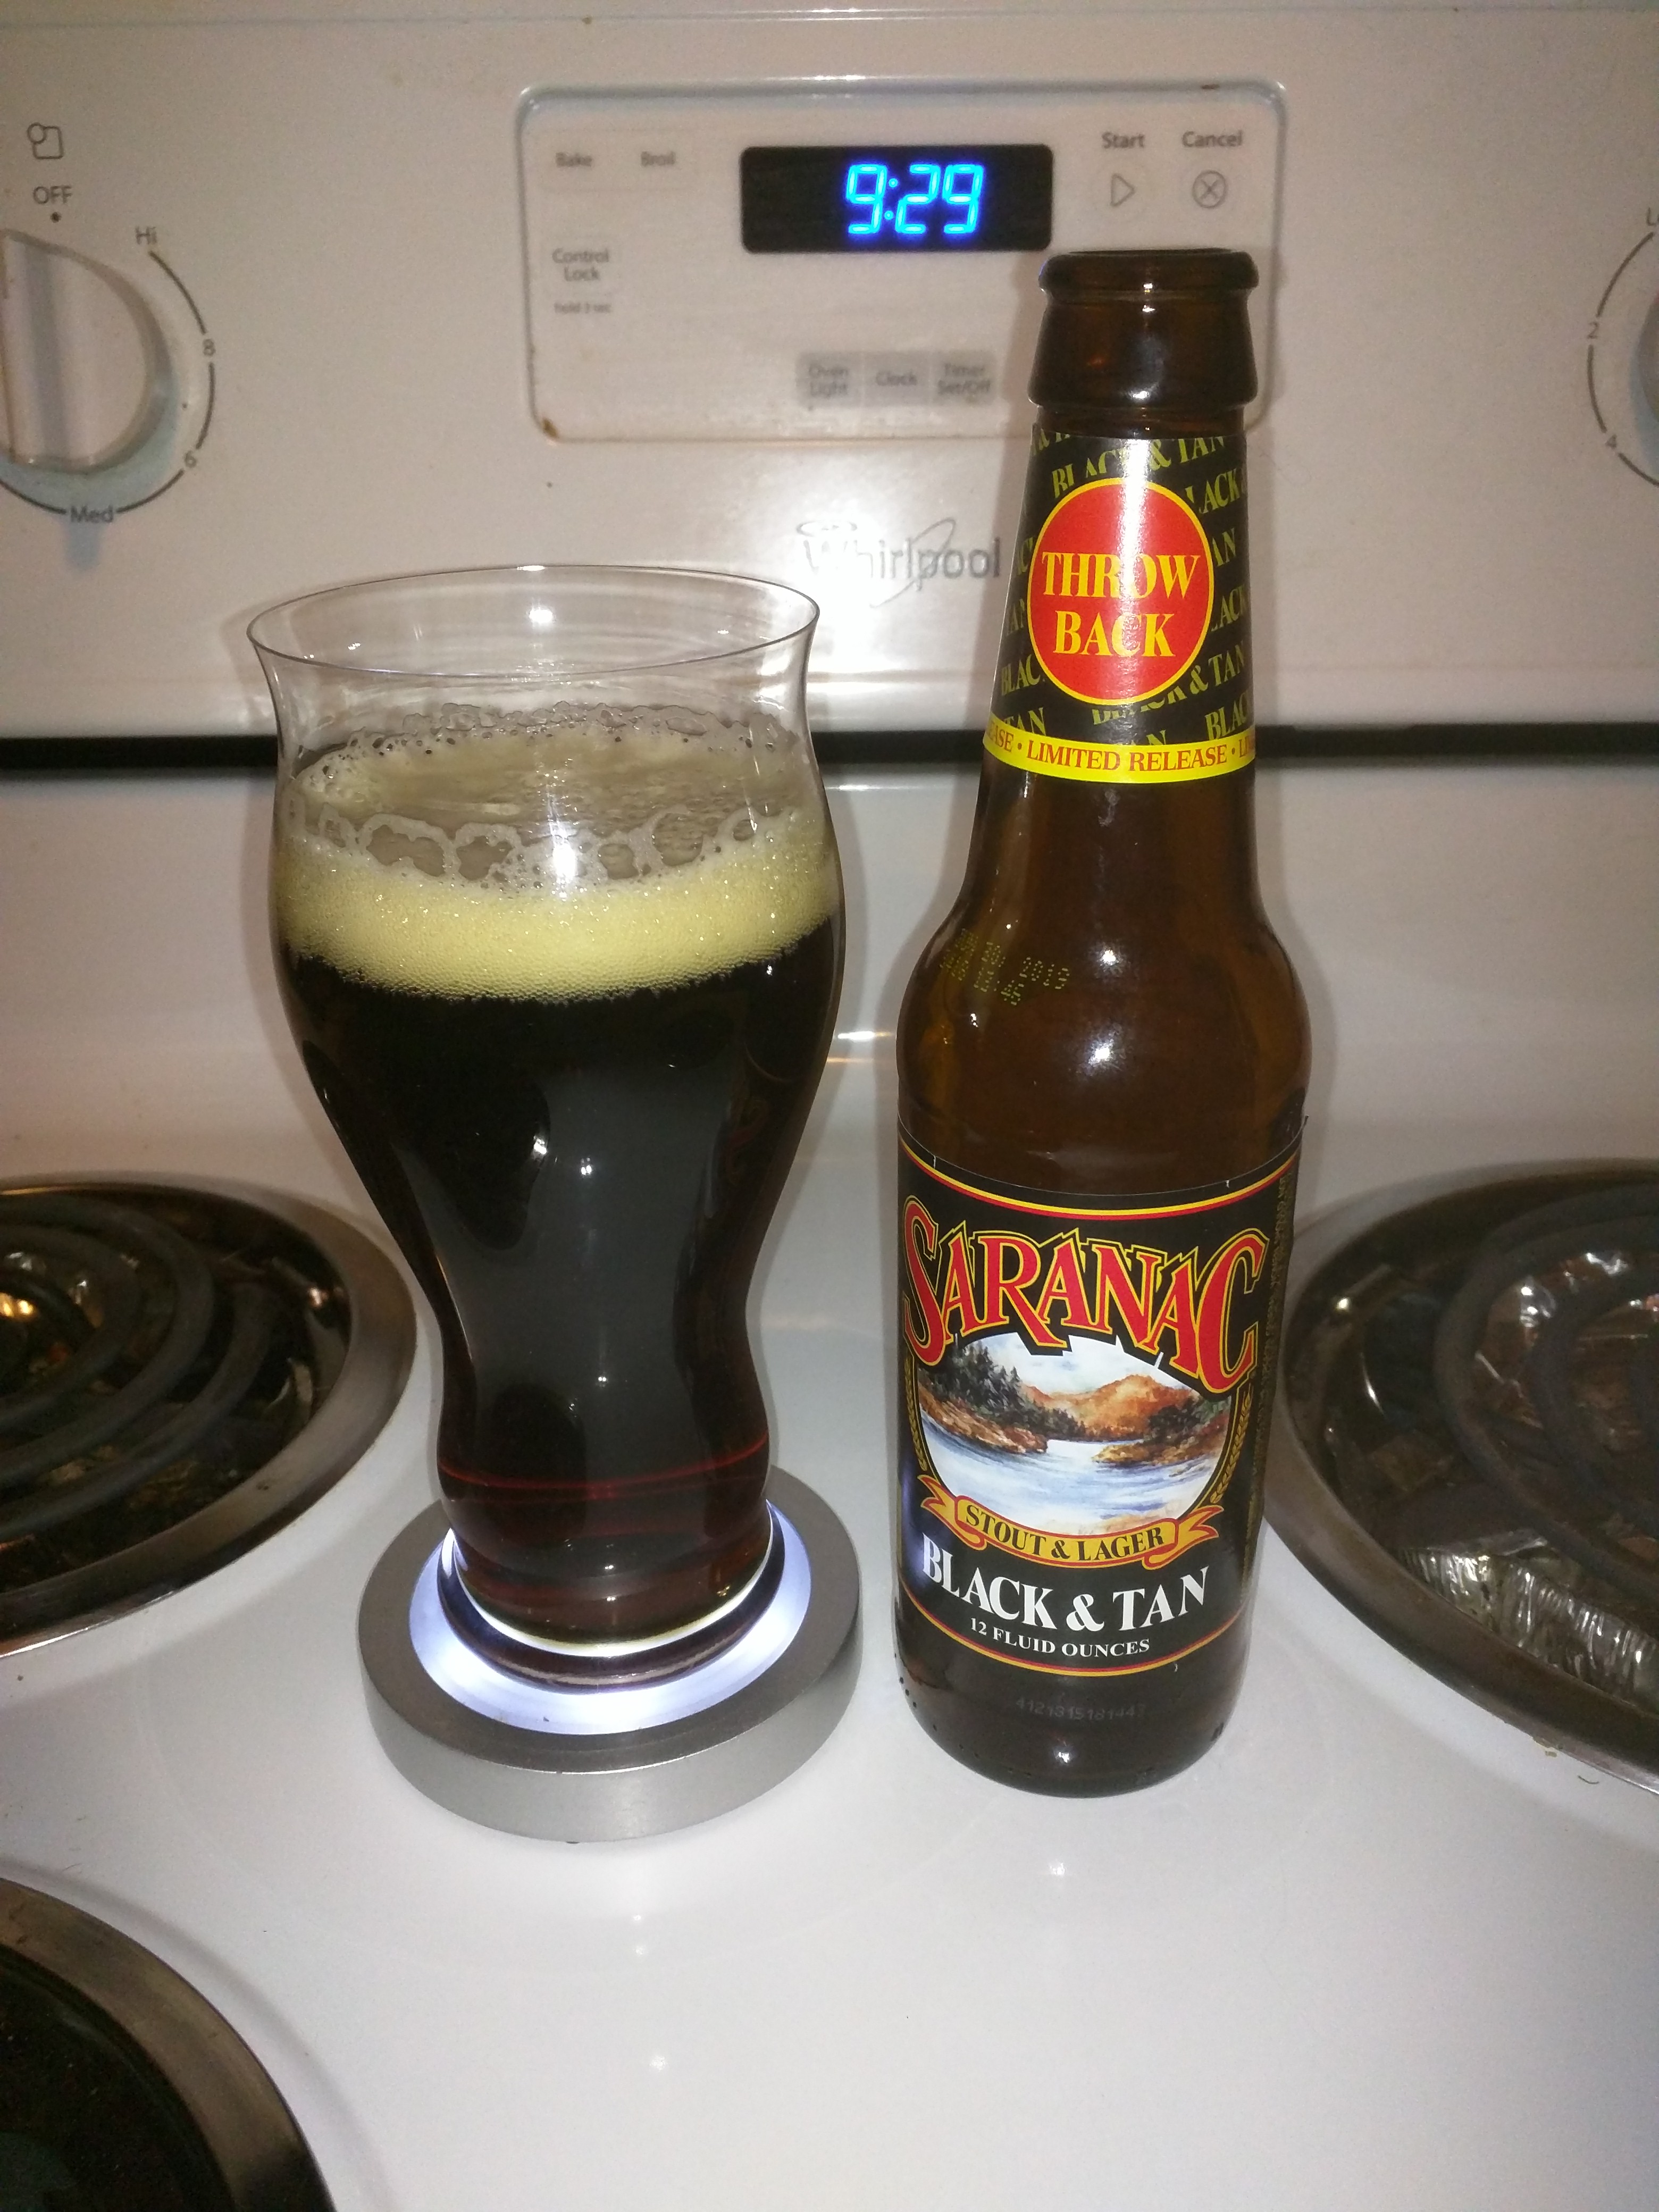 saranac-black-tan-dave-drinks-beer